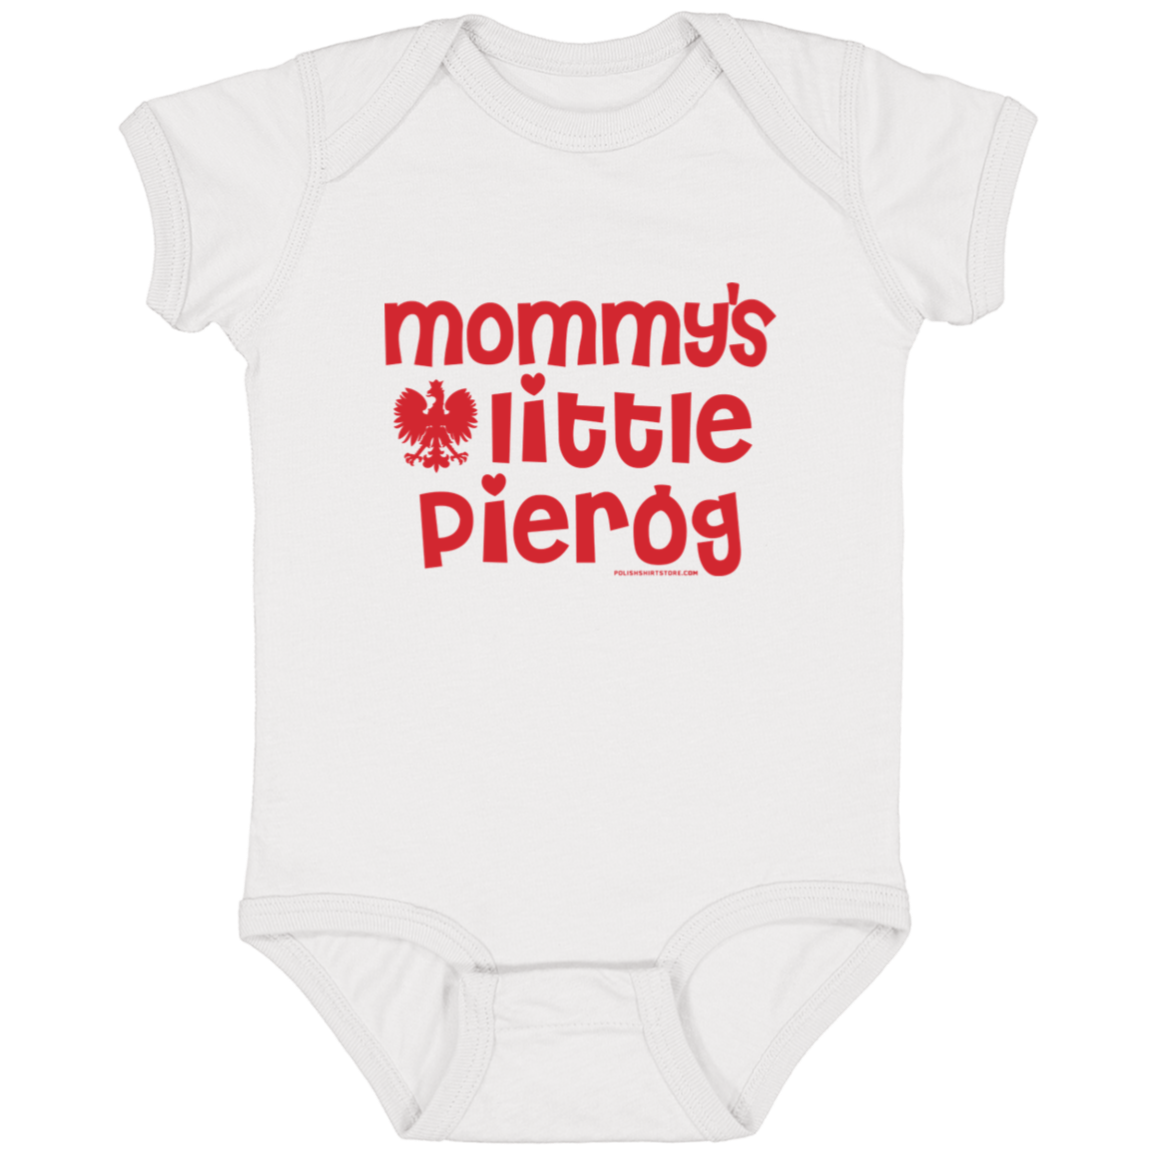 Mommy's Little Pierogi Infant Bodysuit Baby CustomCat White Newborn 